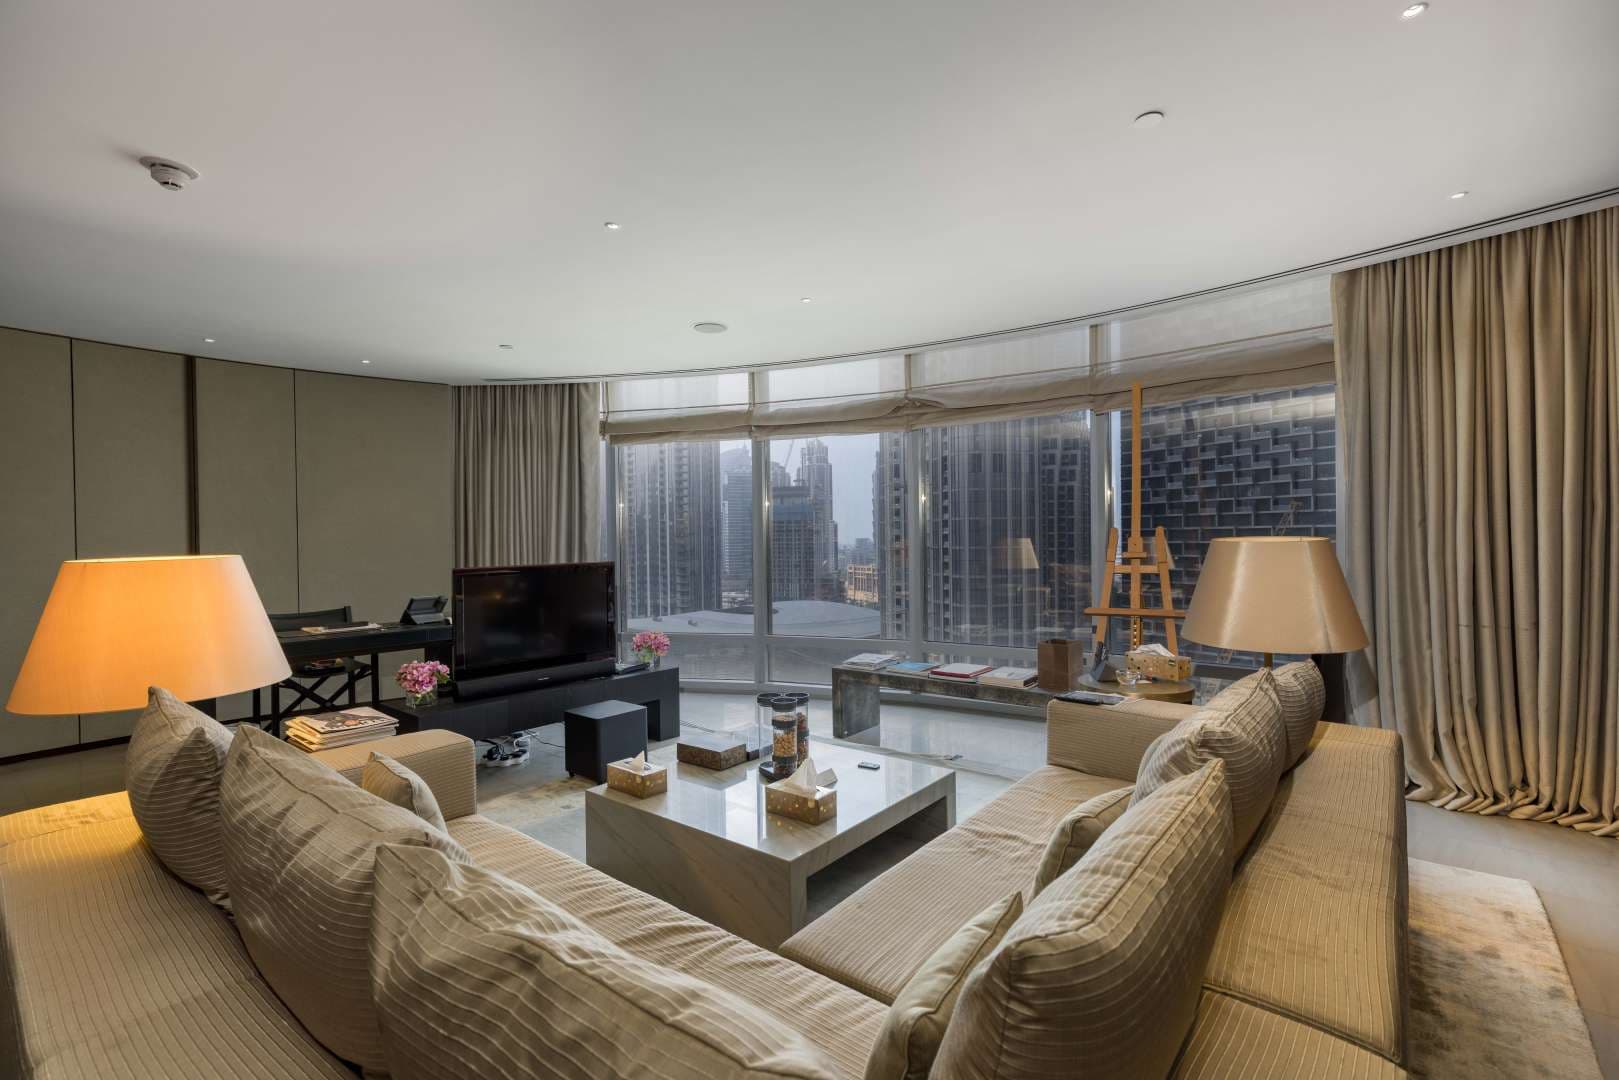 2 Bedroom Apartment For Rent Burj Khalifa Area Lp11434 1b2109b1ea1e6900.jpg